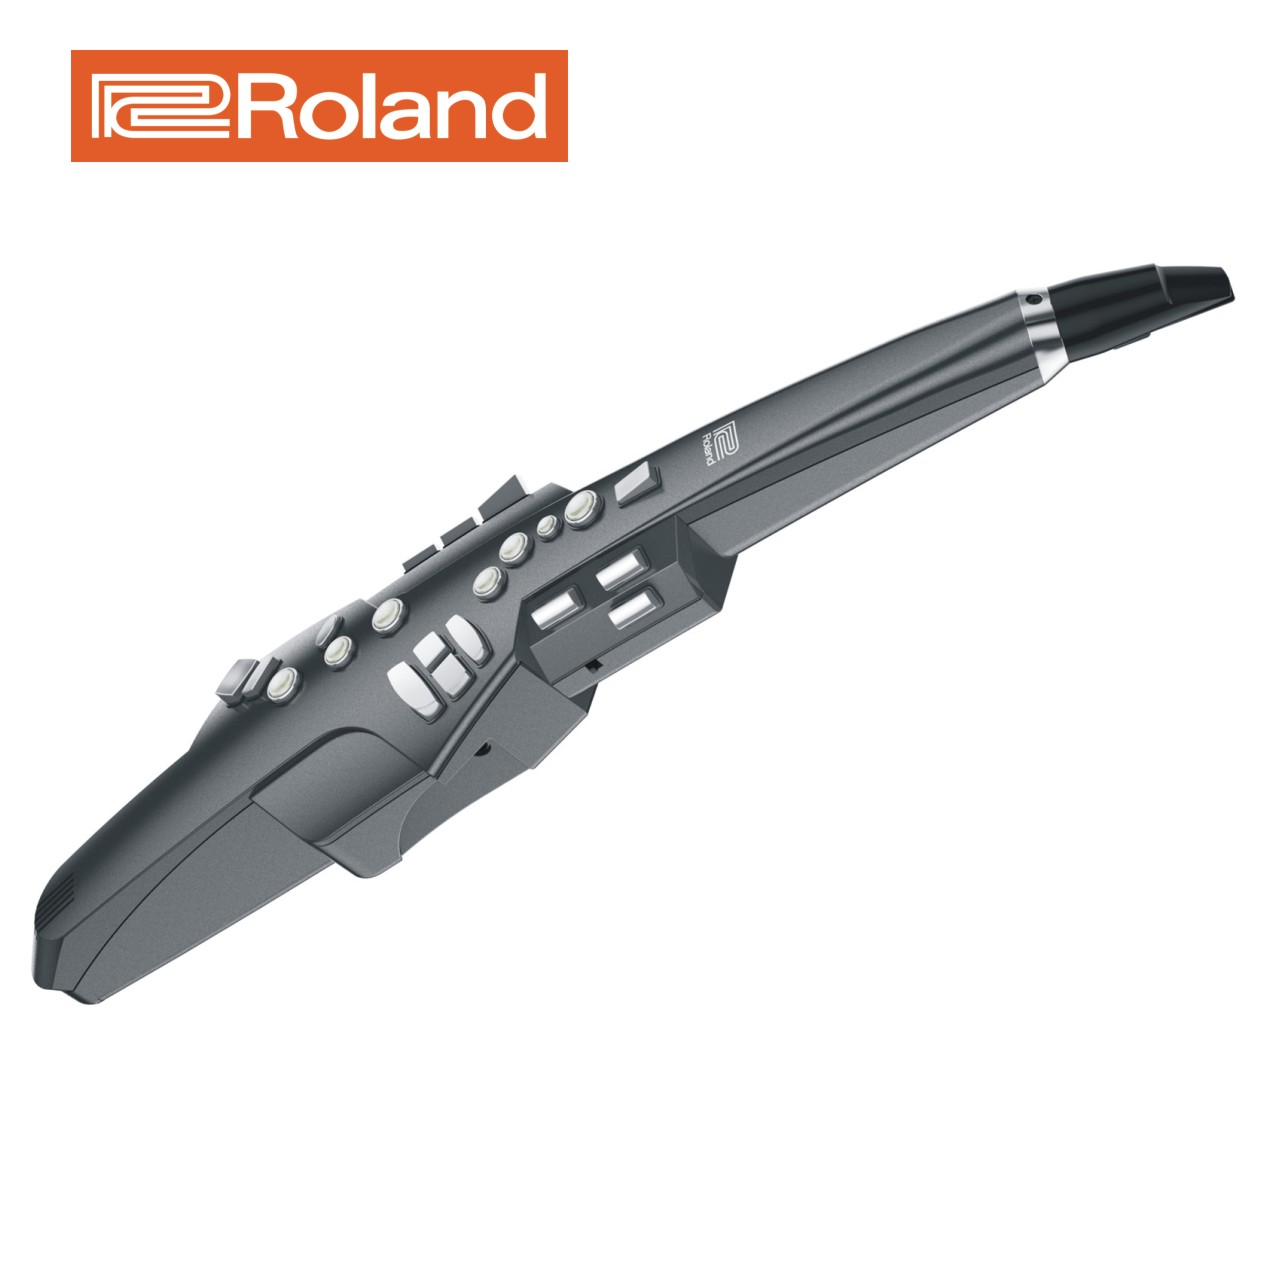 Roland 롤랜드 전자색소폰 에어로폰 AE-10G